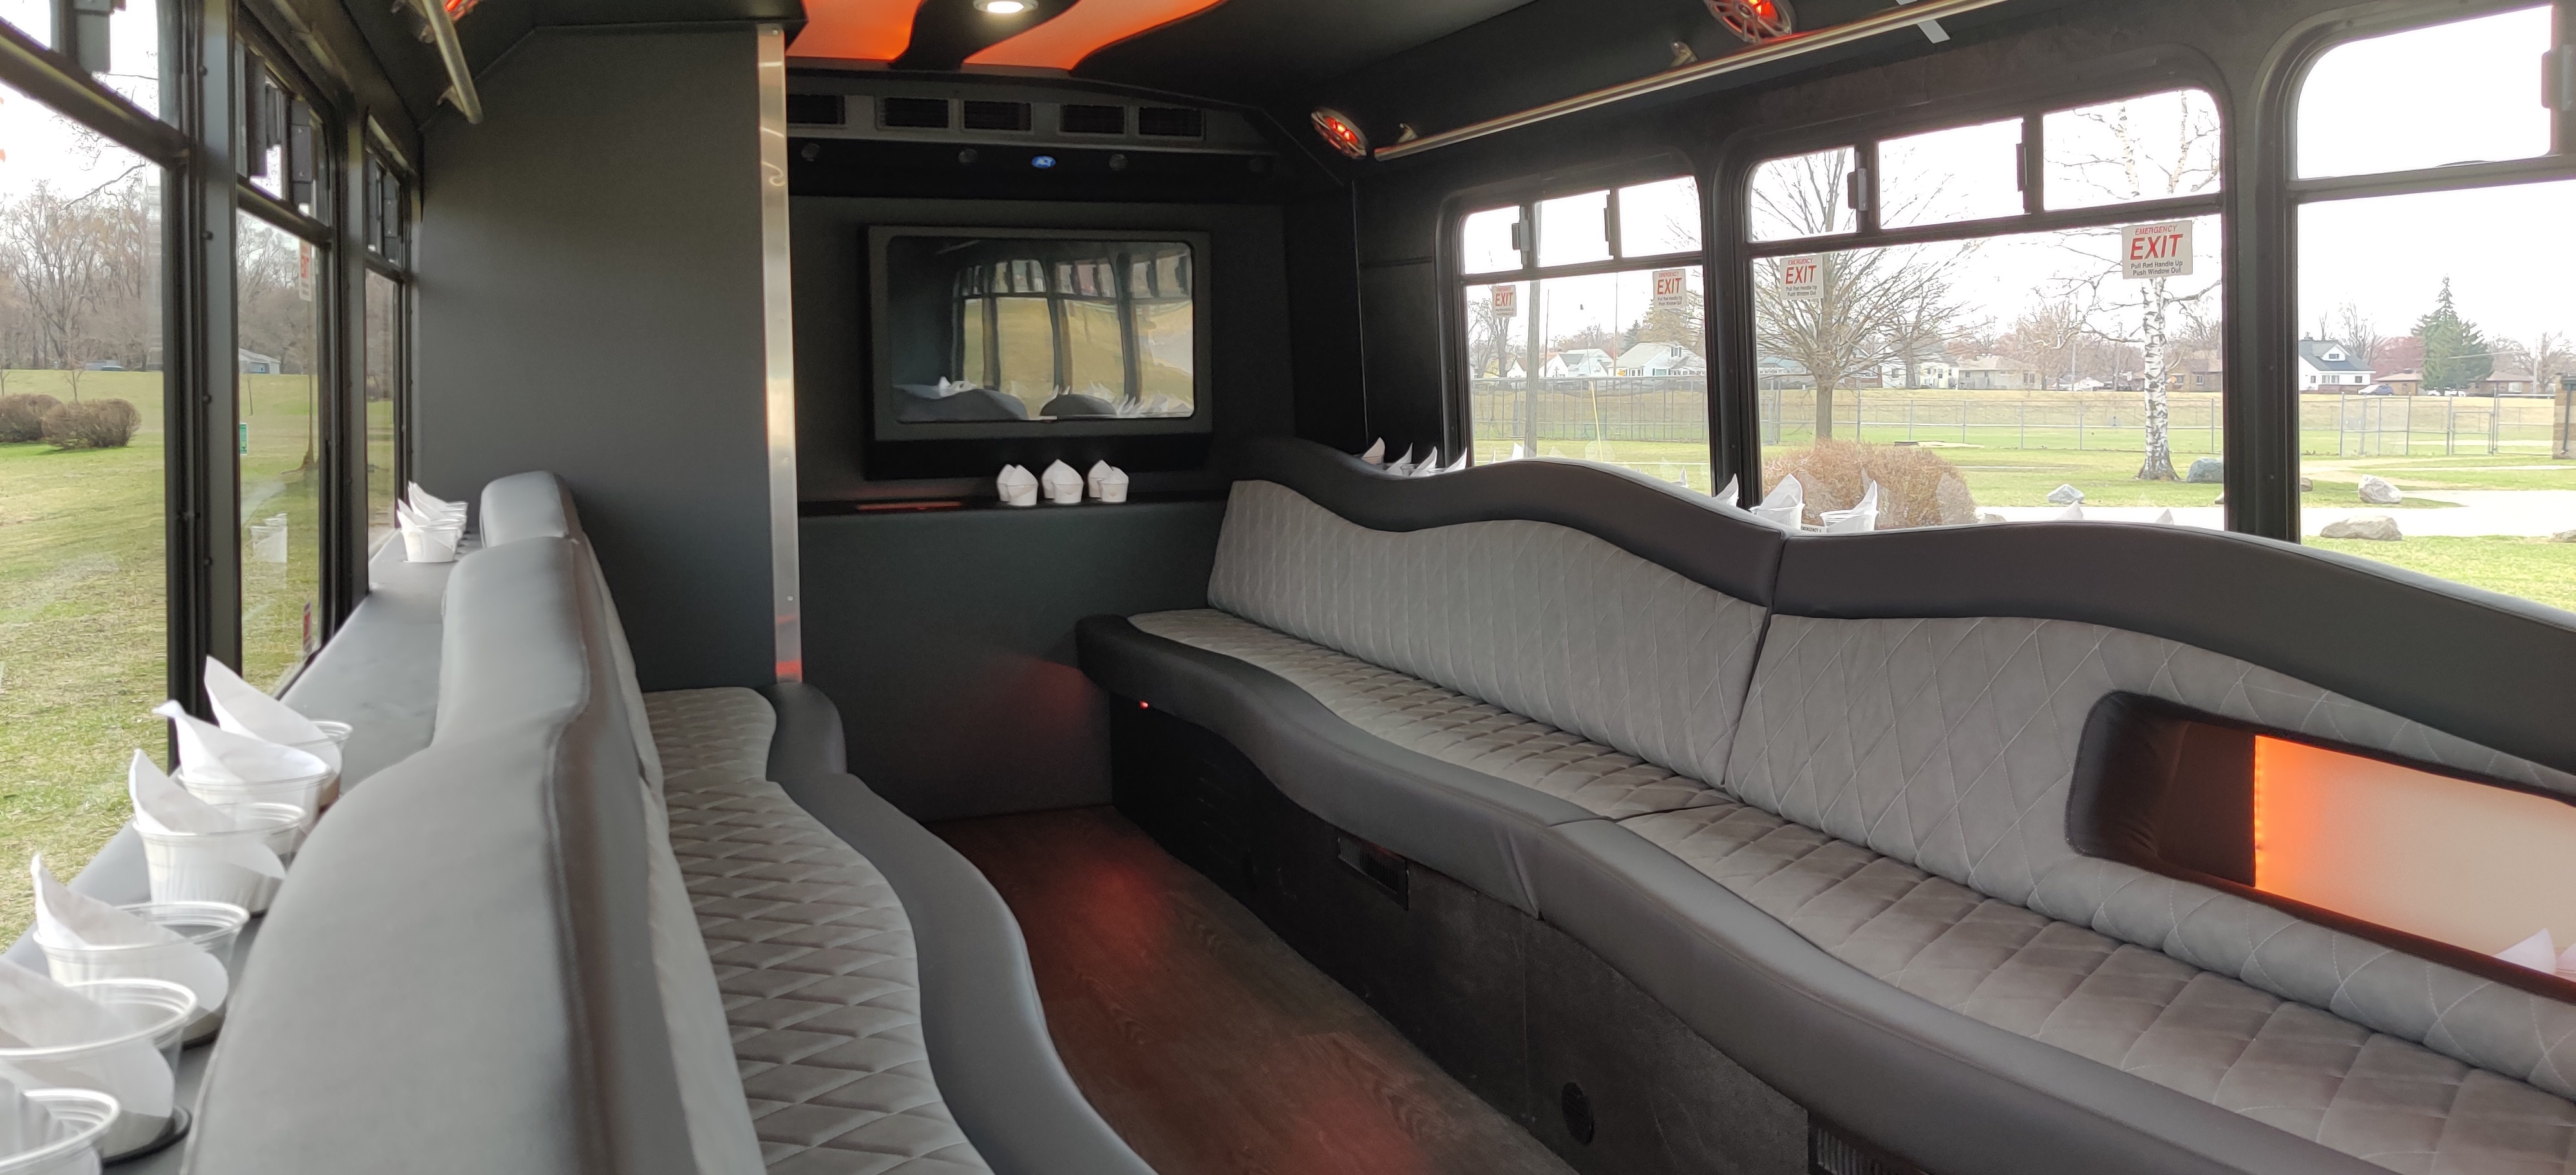 21 Passenger Luxury Limo Bus Interior 2